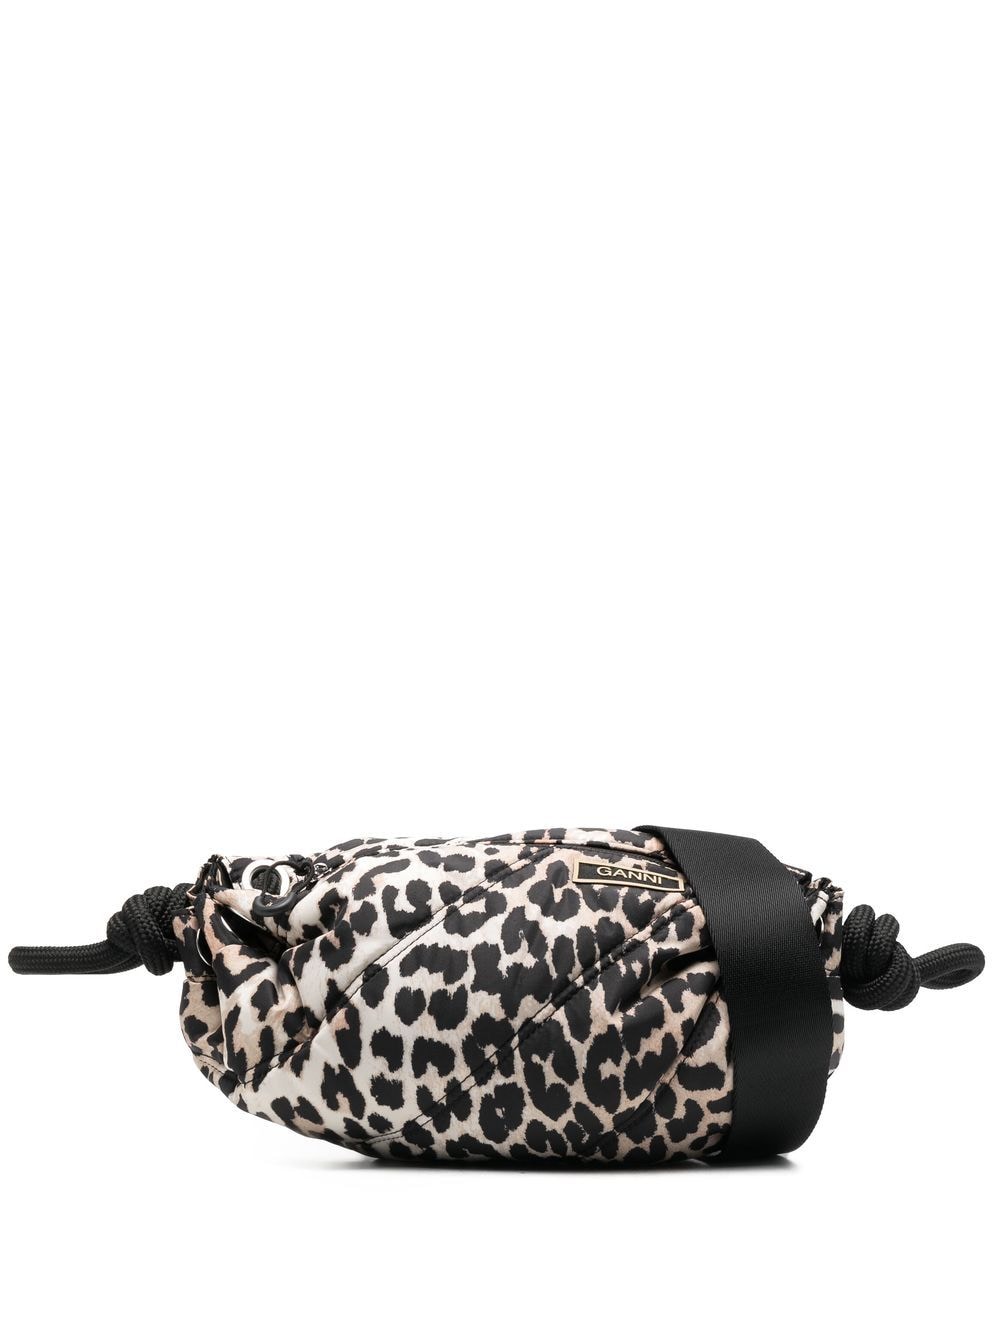 GANNI leopard-print cross-body bag - Neutrals